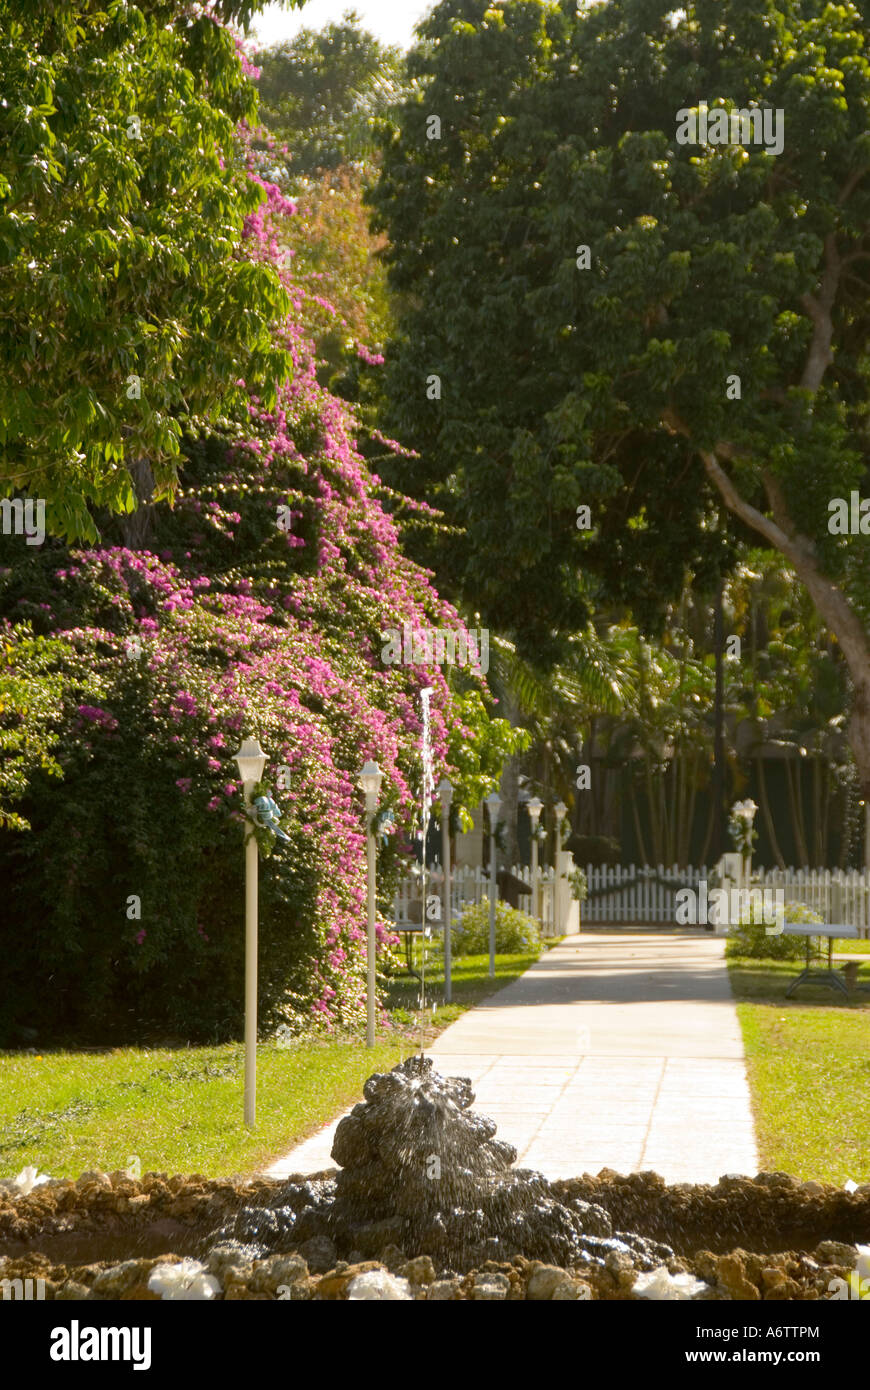 Thomas Edison Winter home Immobilien Fort Myers Florida Garten Gehweg lila Blumen Bäume Stockfoto